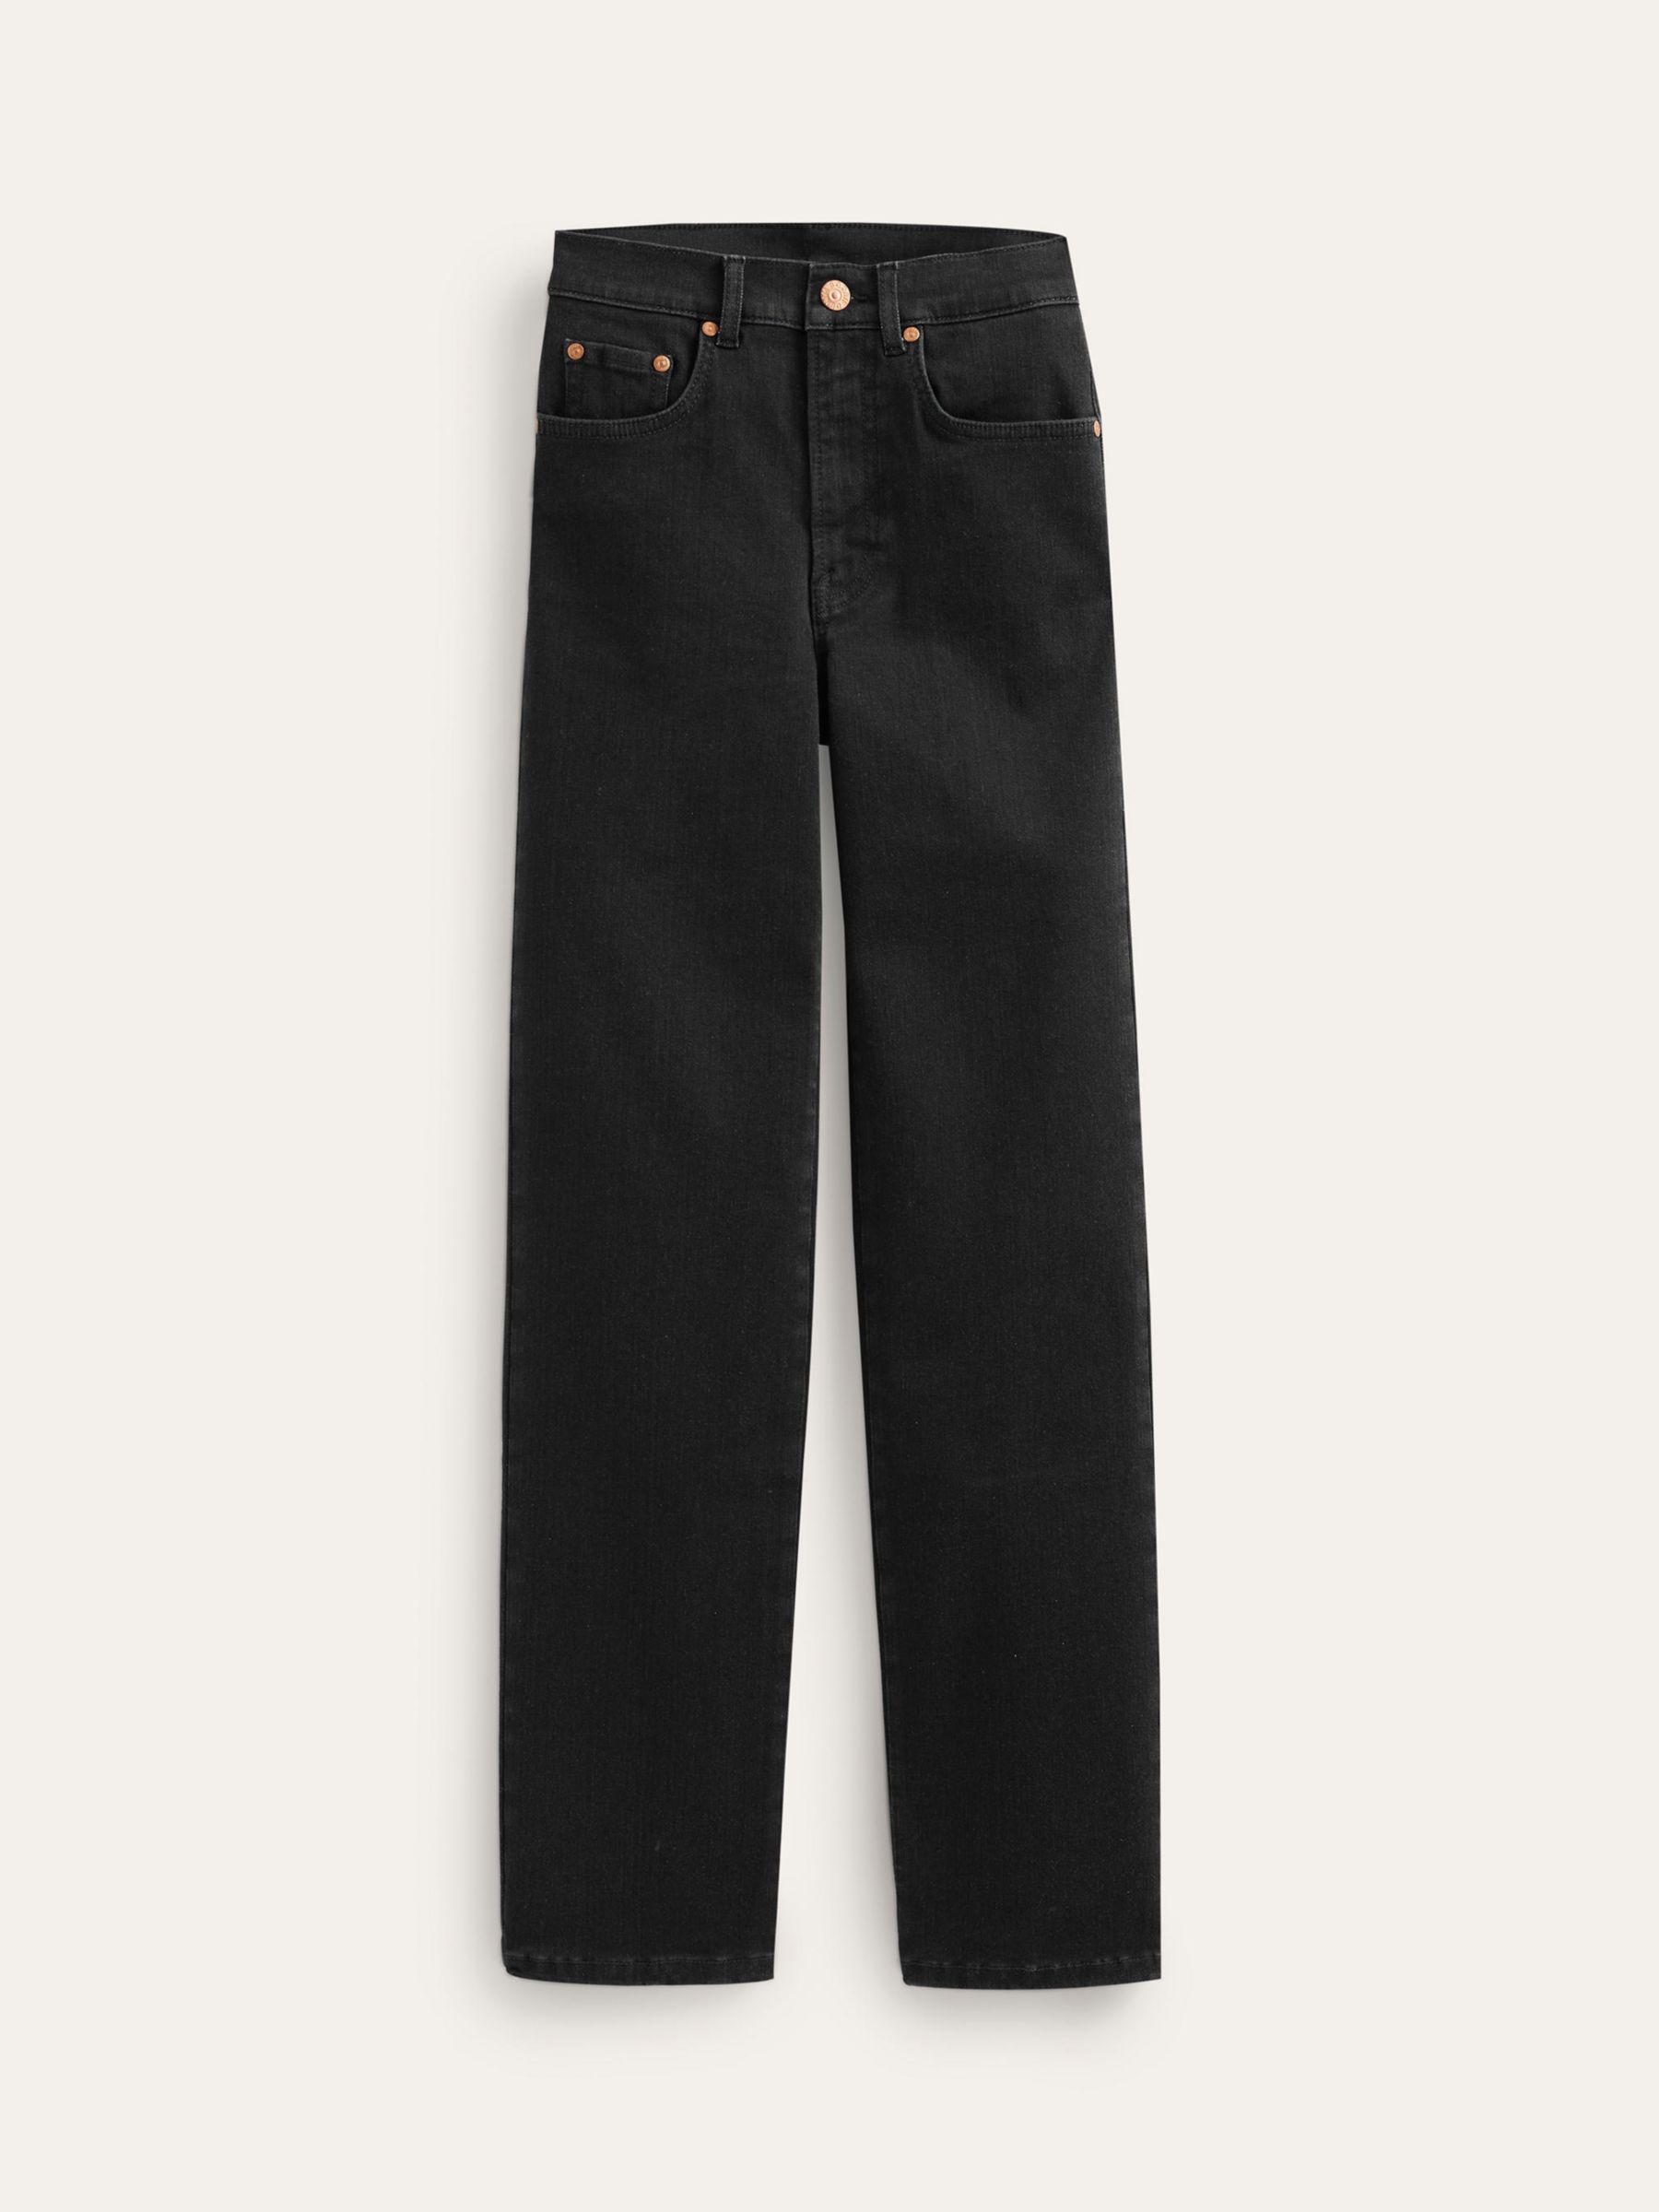 Boden Mid Rise Cigarette Jeans, Black, W27/L32